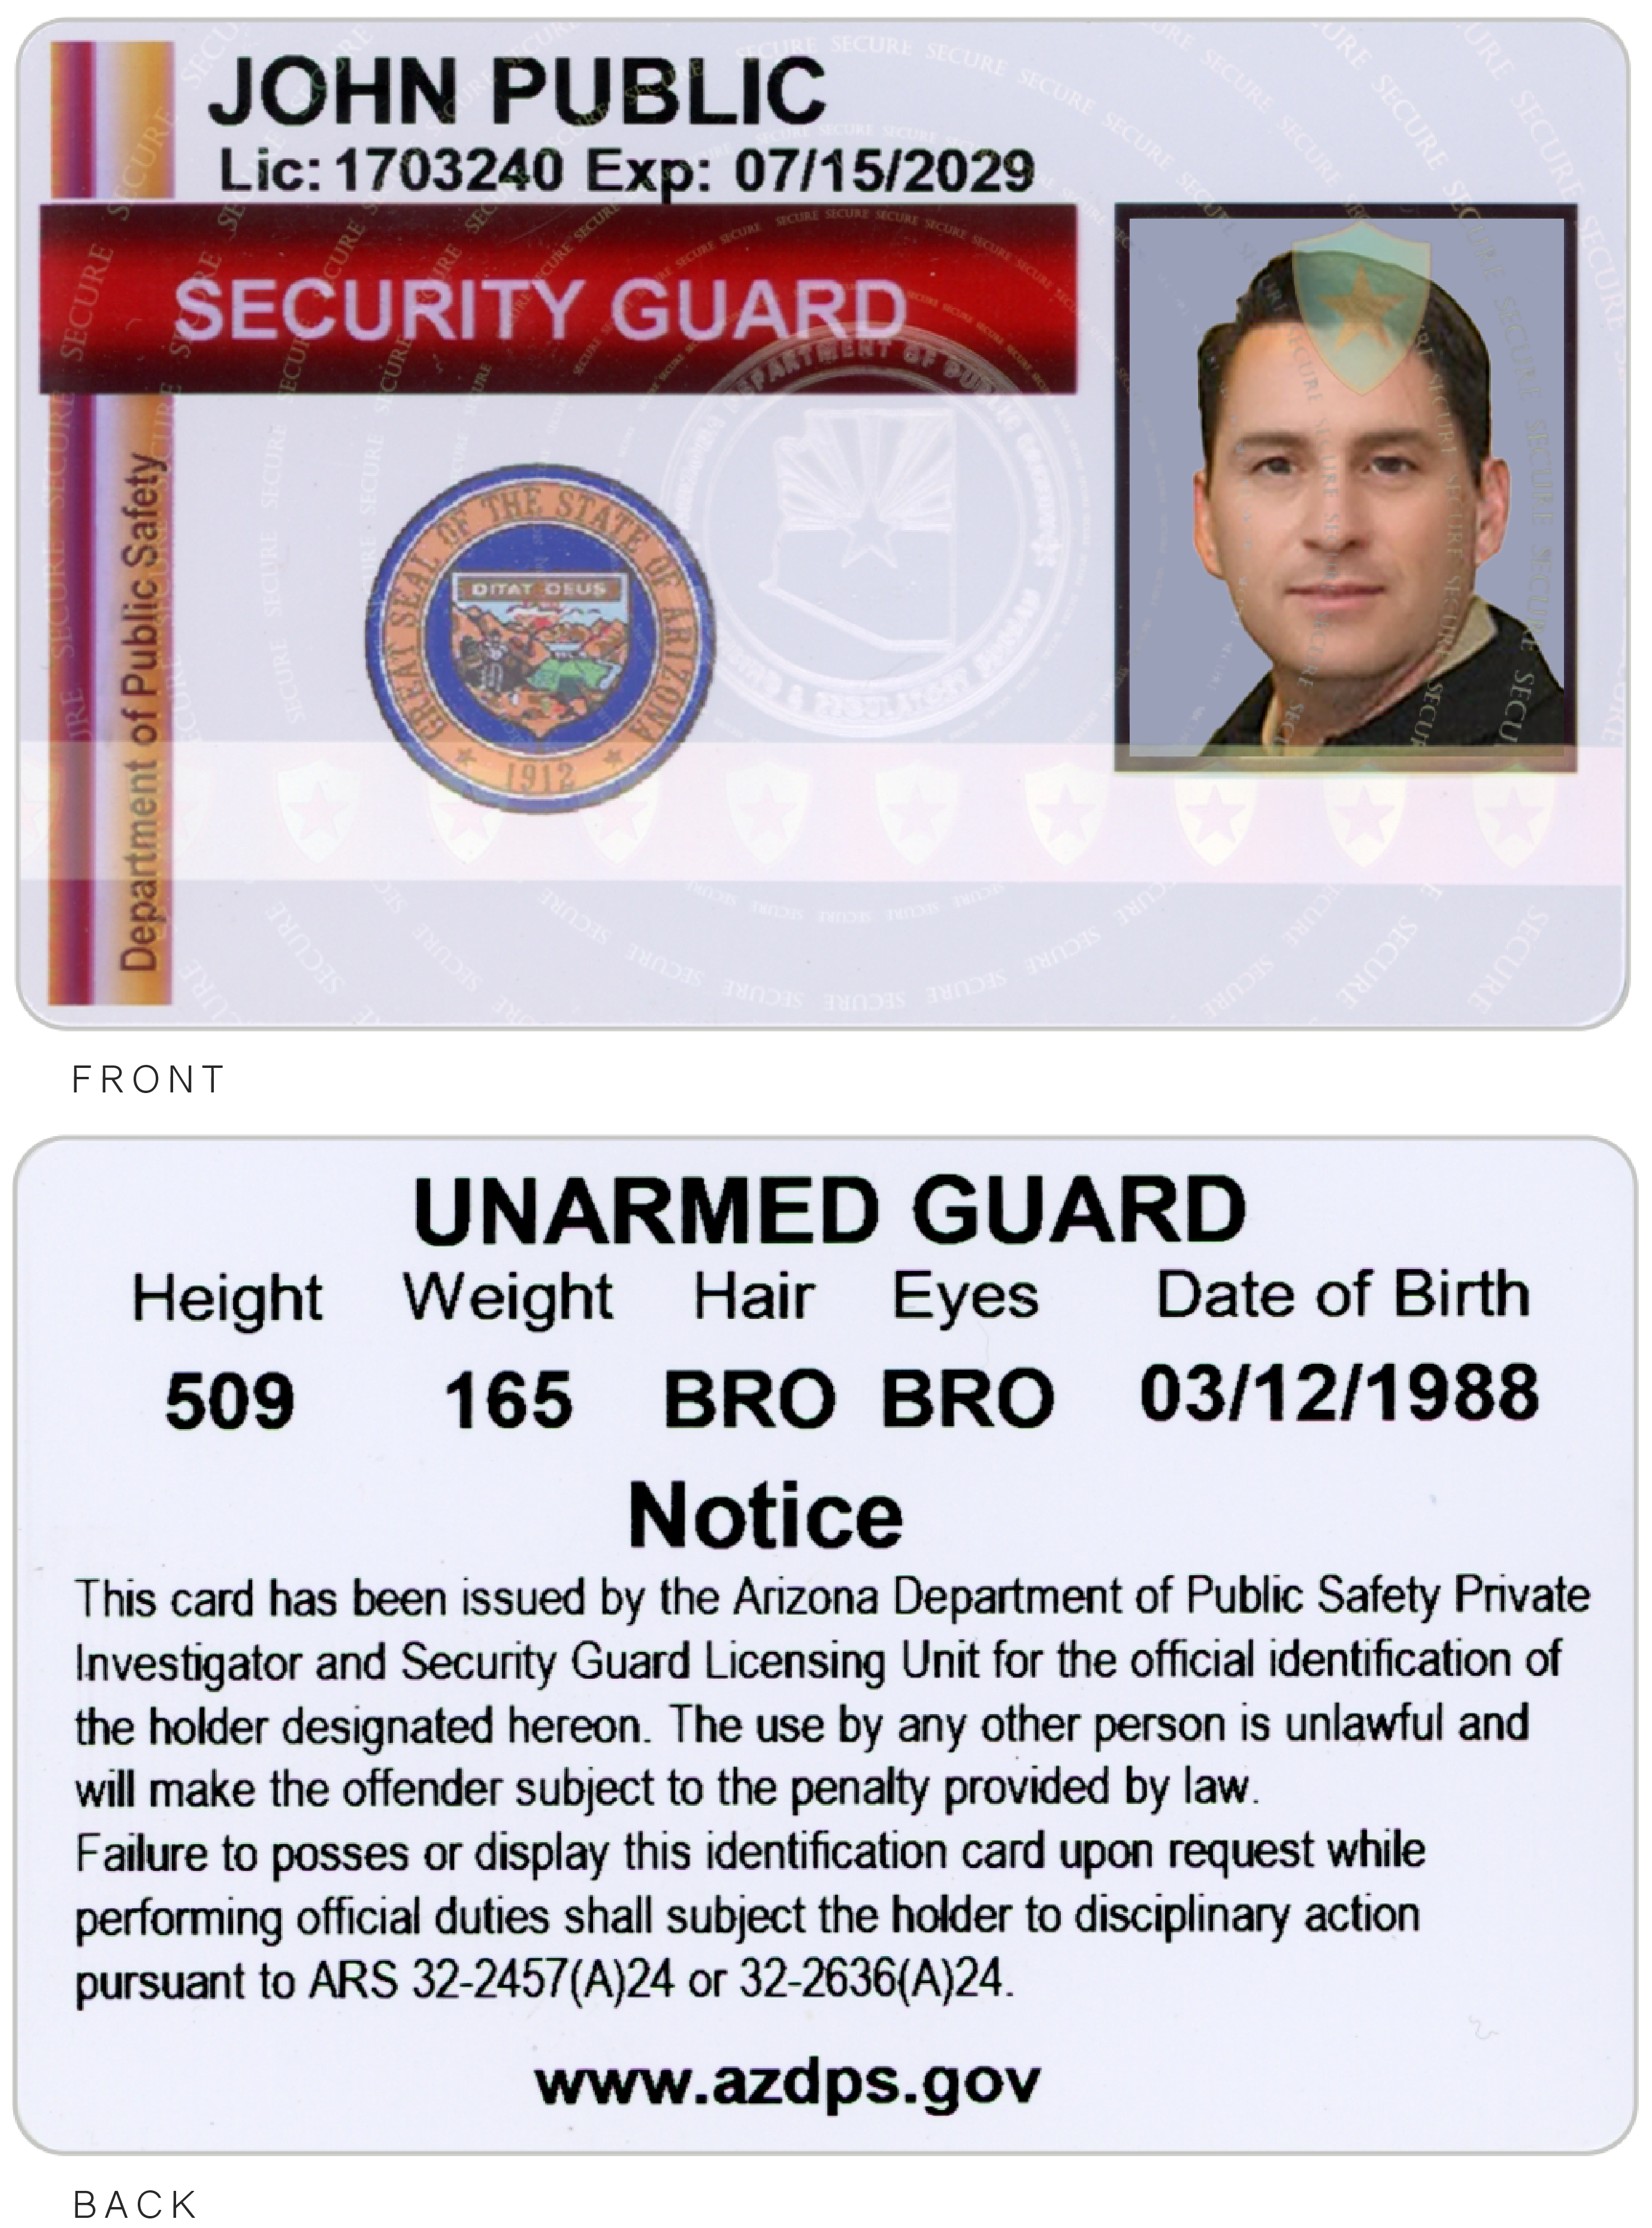 Legacy Unarmed Guard Card